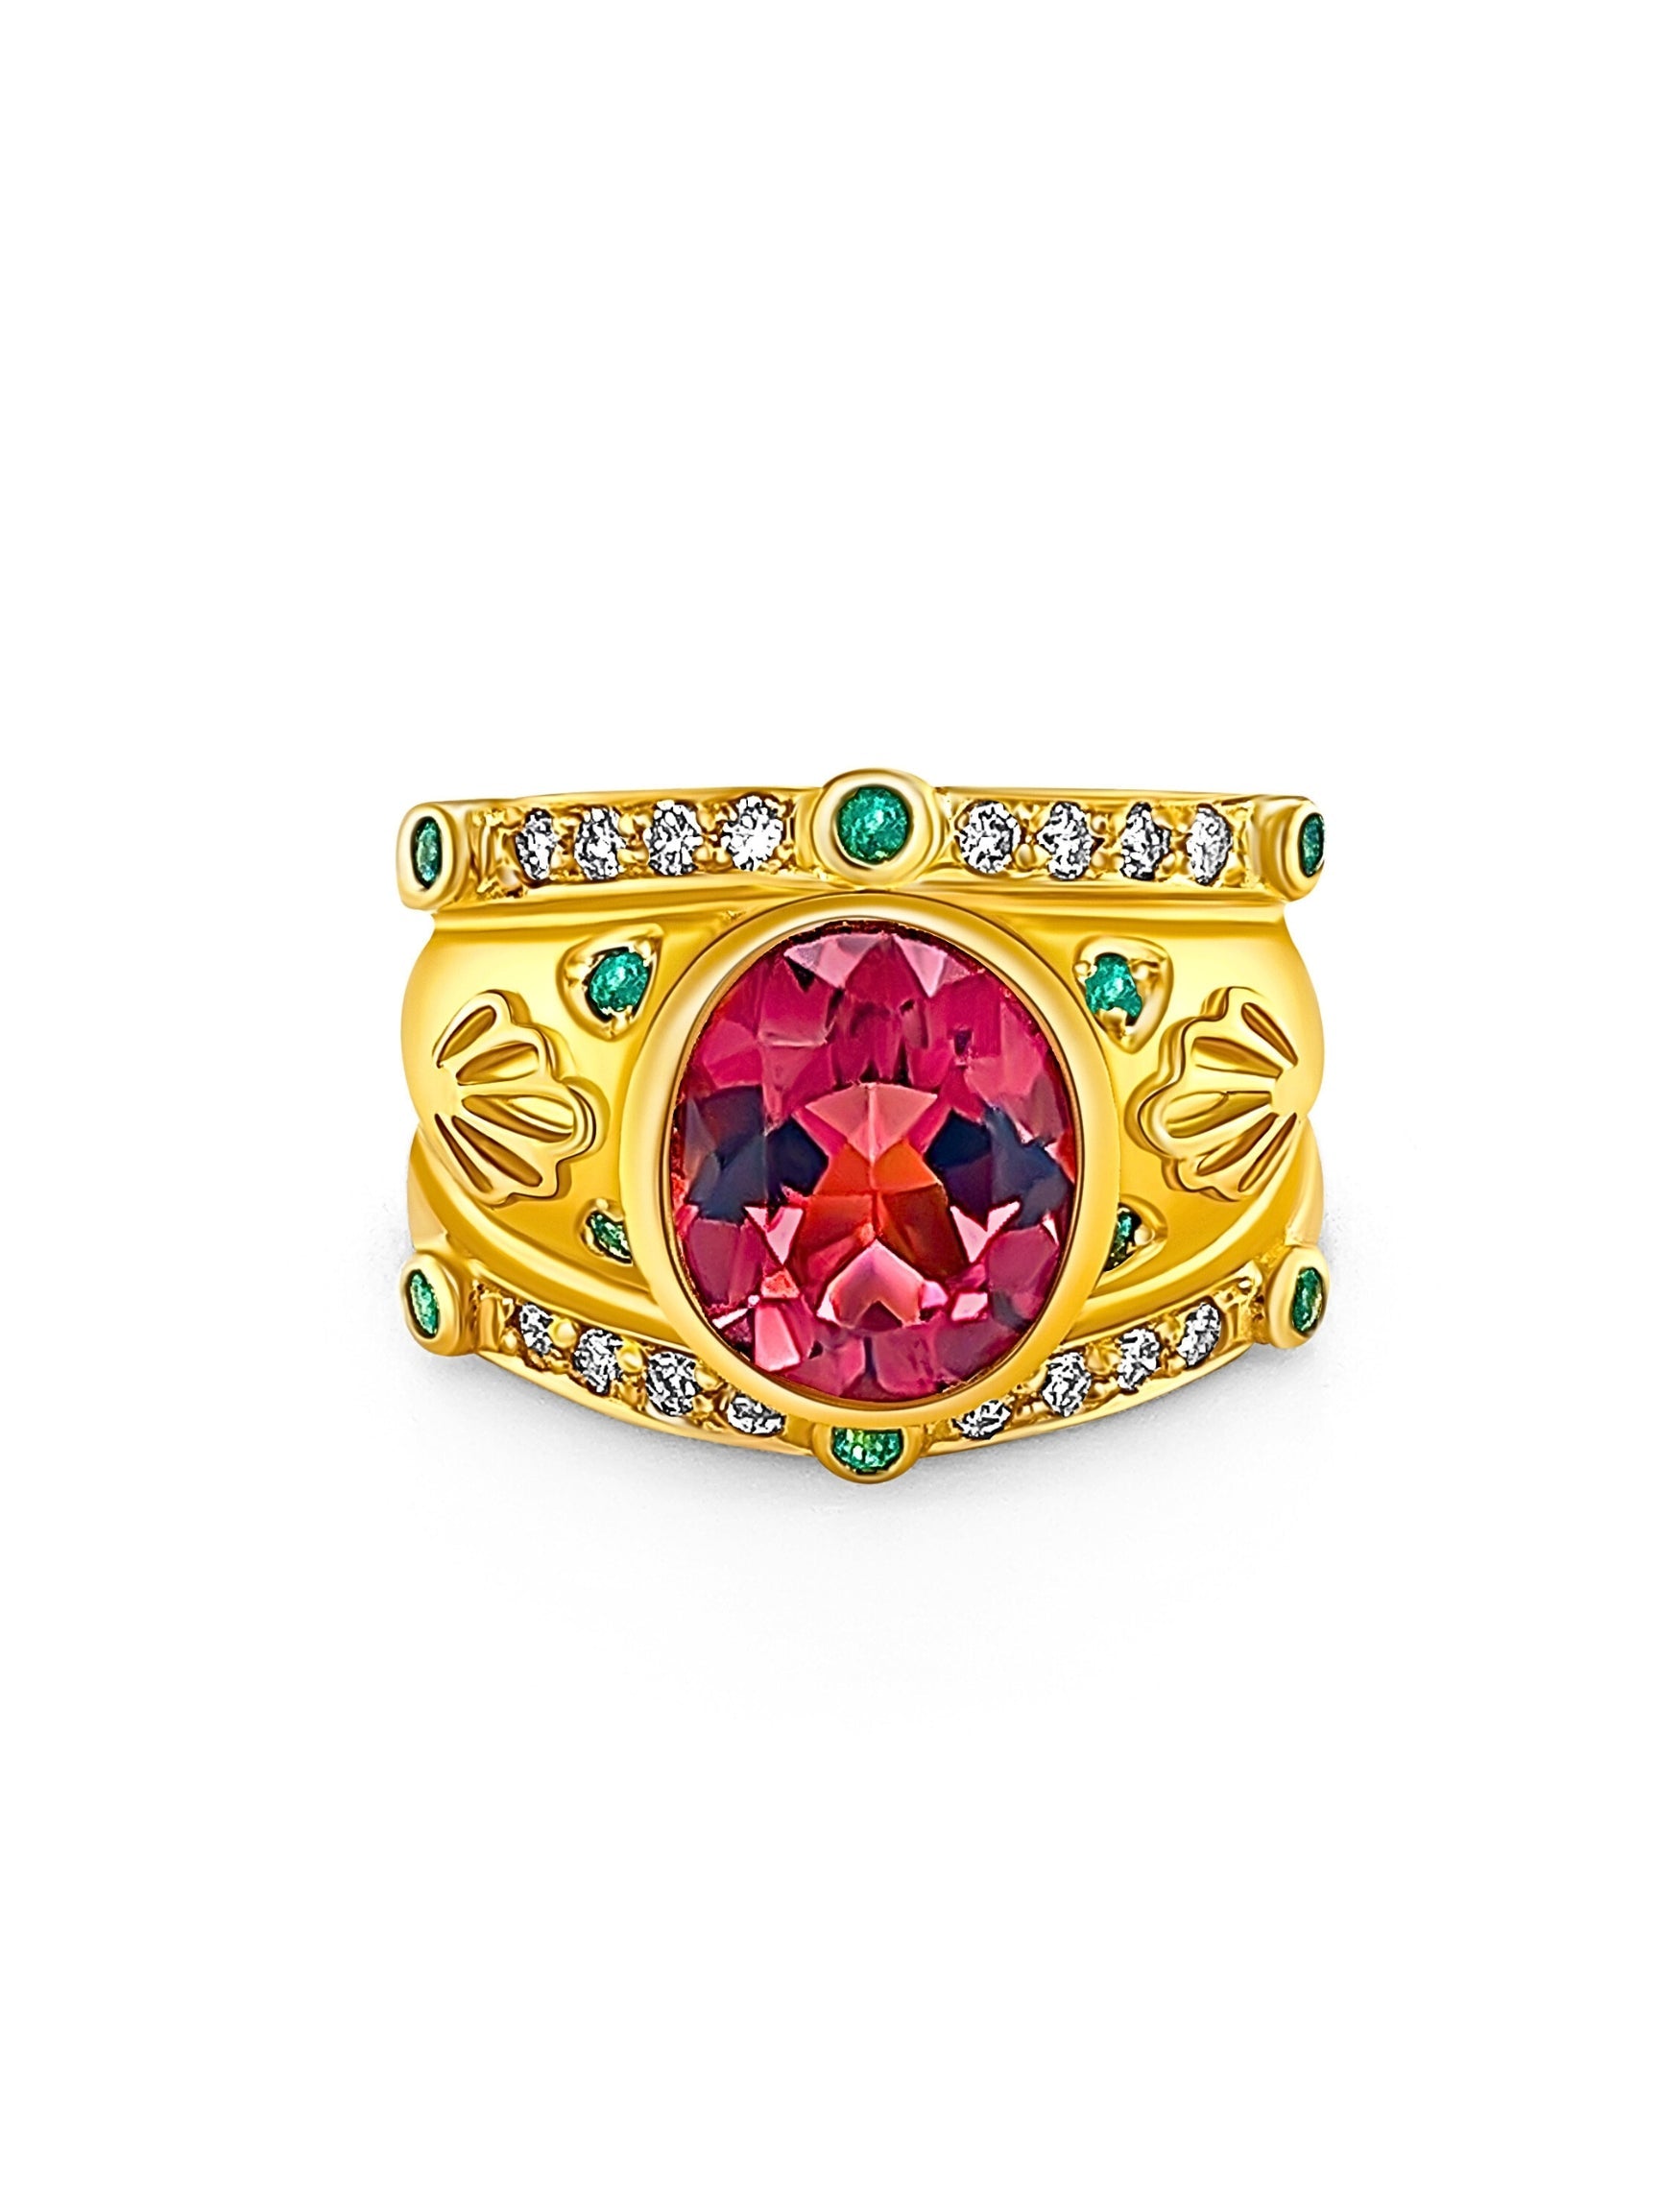 Vintage-6-Carat-TW-Oval-Cut-Pinkish-Red-Tourmaline-with-Neon-Paraiba-Tourmaline-and-Diamond-Ring-in-18K-Gold-Semi-Precious-Jewelry.jpg